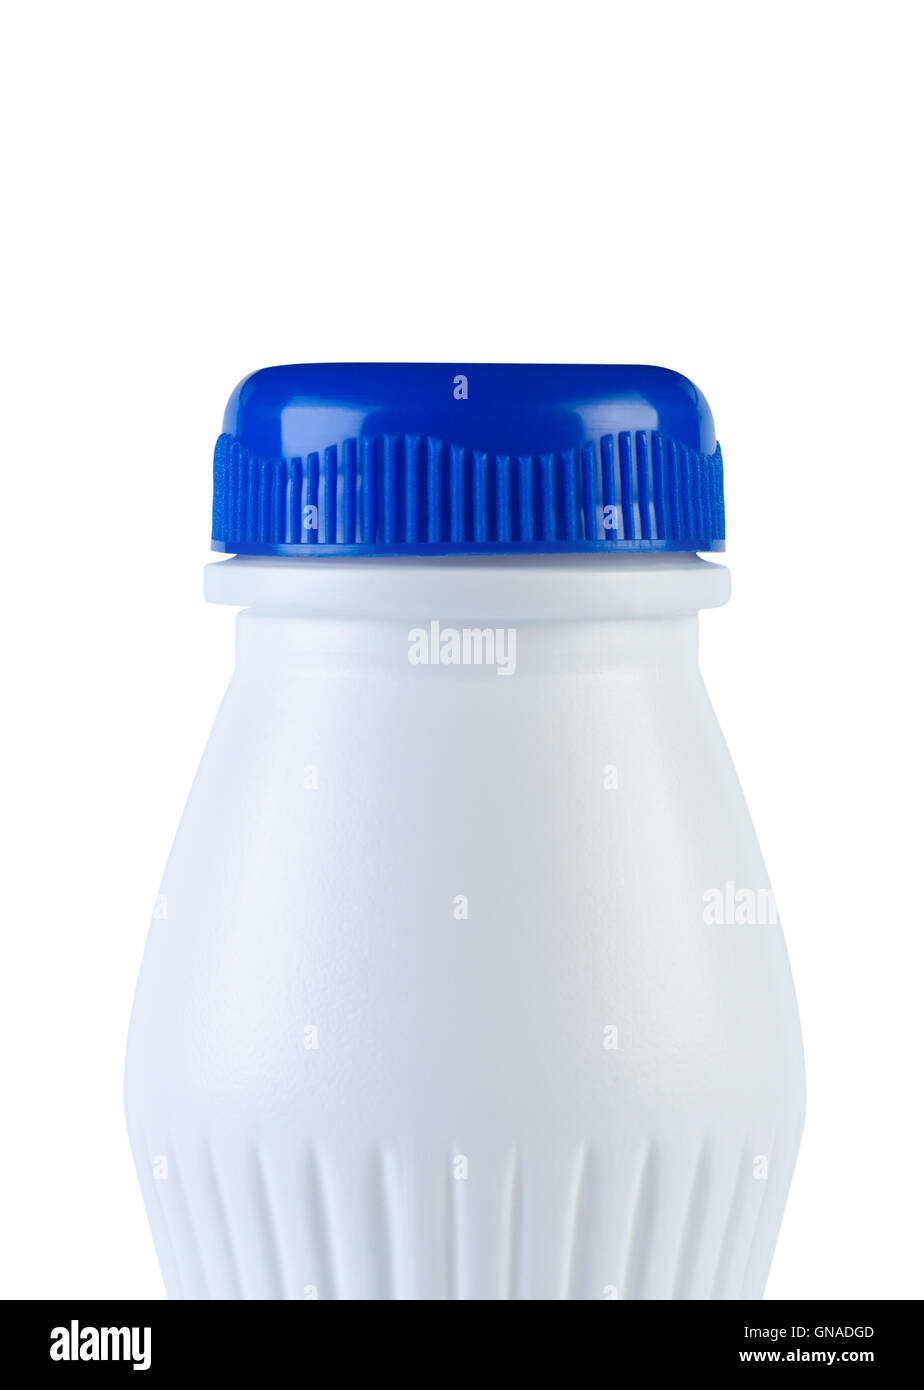 https://c8.alamy.com/comp/GNADGD/plastic-bottle-with-blue-cap-GNADGD.jpg